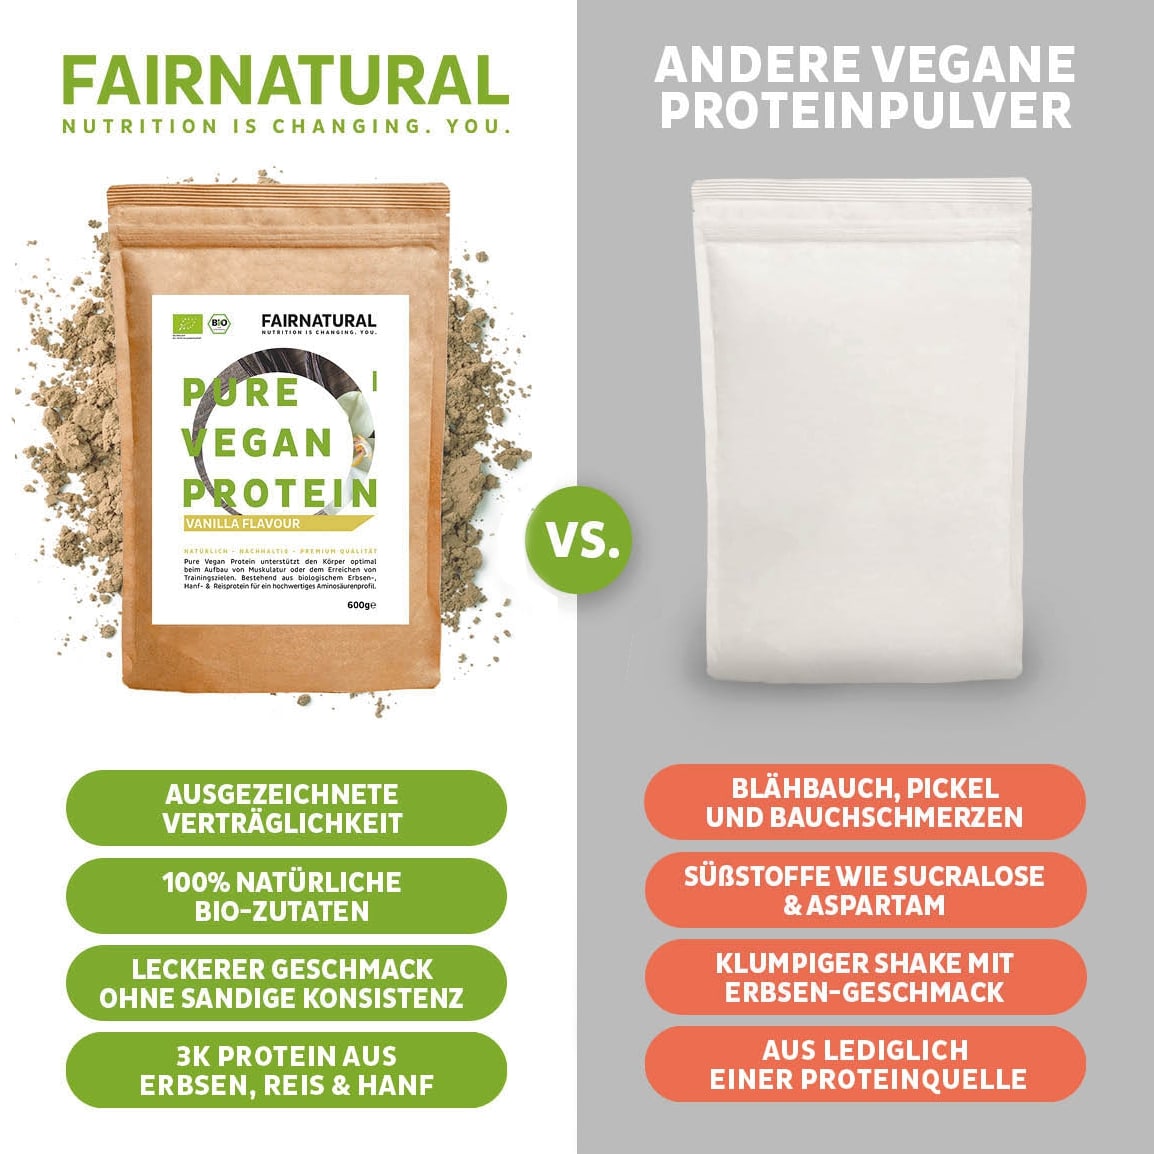 Organic Vegan Protein Powder Vanilla without Soy